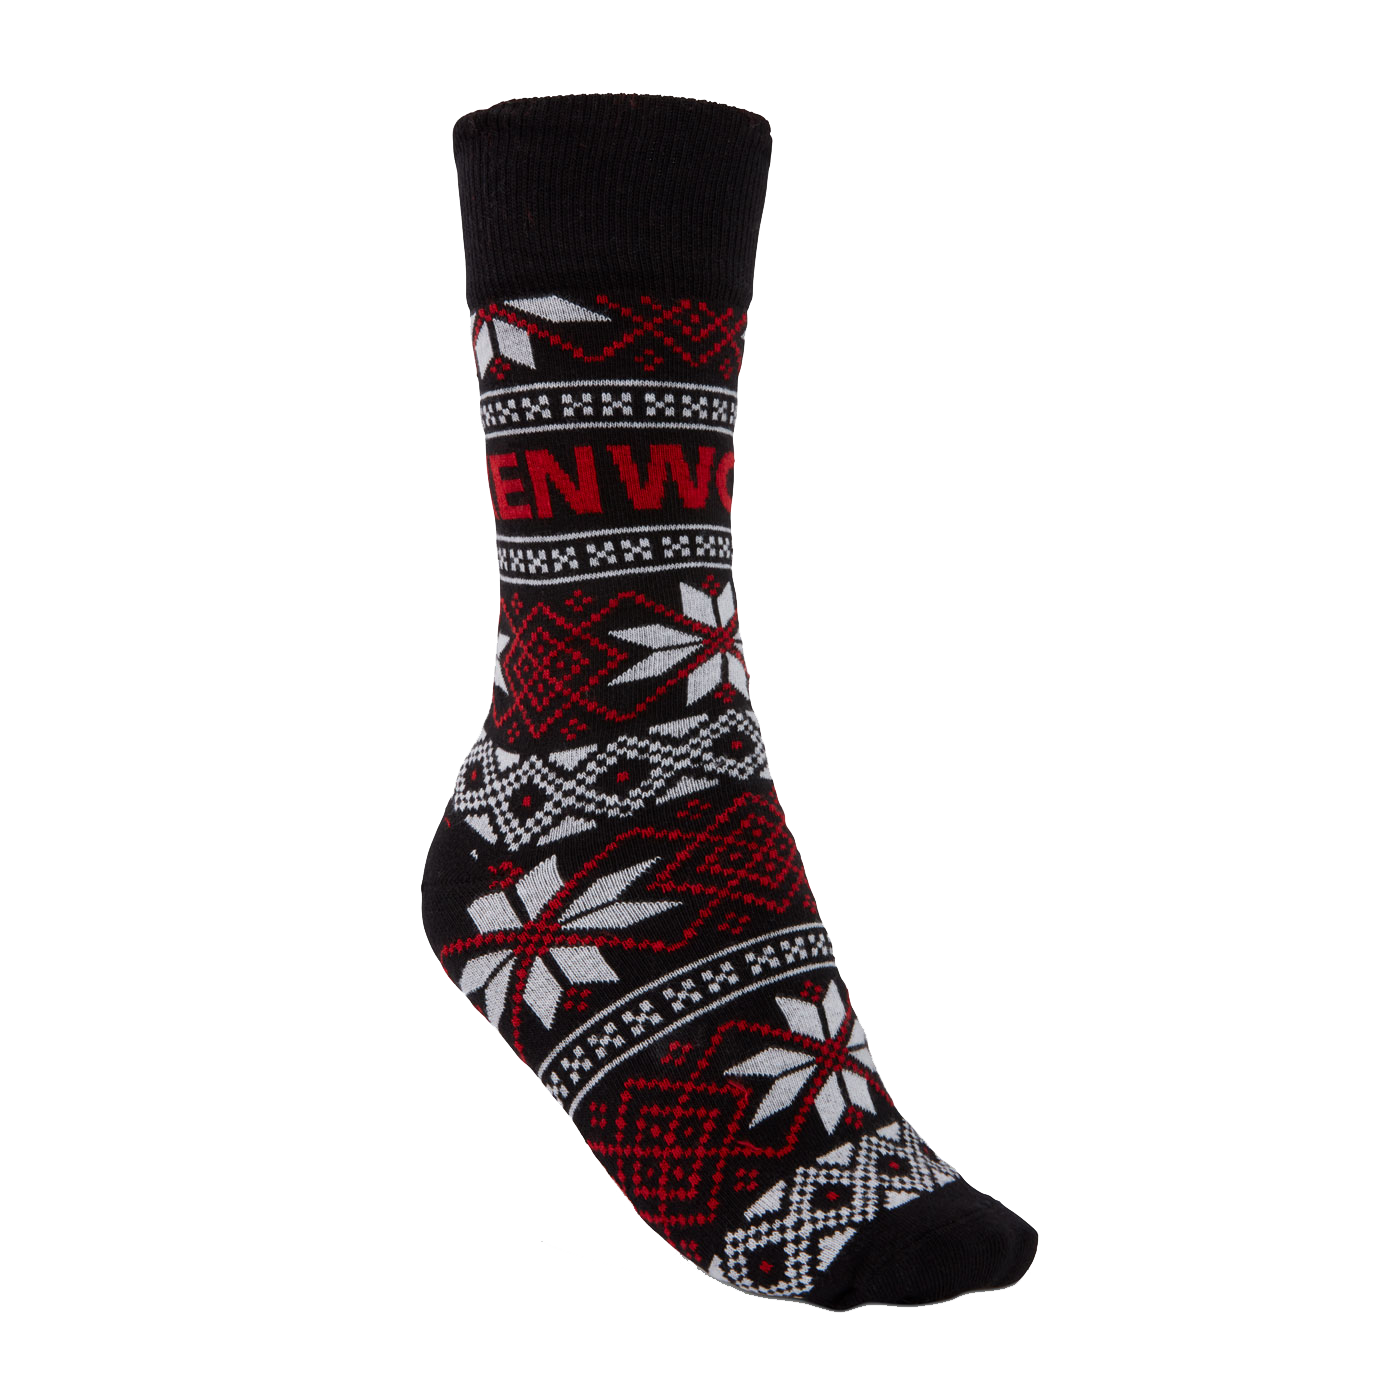 Kenworth Winter Socks